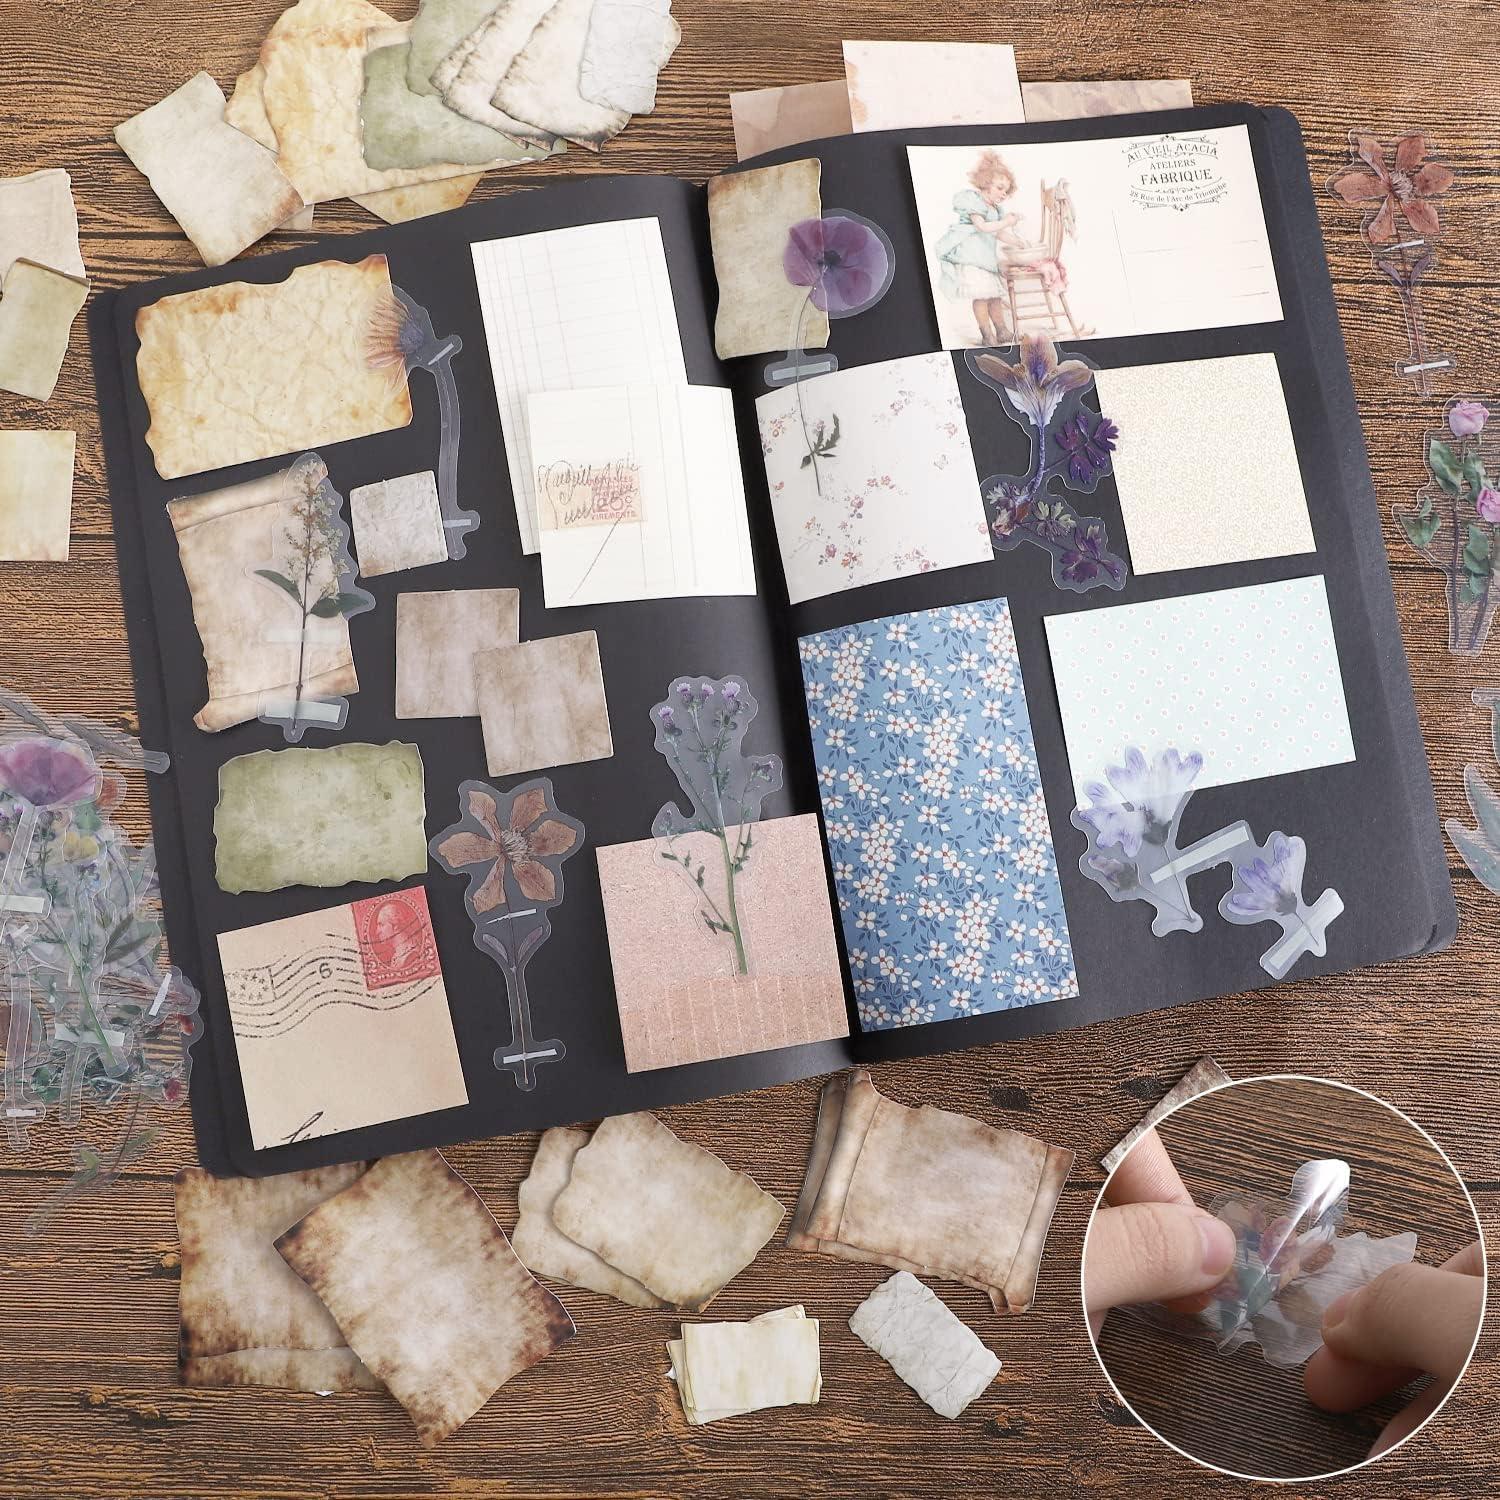 100 Pcs Retro Book Pages Collage Material Paper Junk Journal Planner  Scrapbooking Vintage Decorative Diy Craft Paper